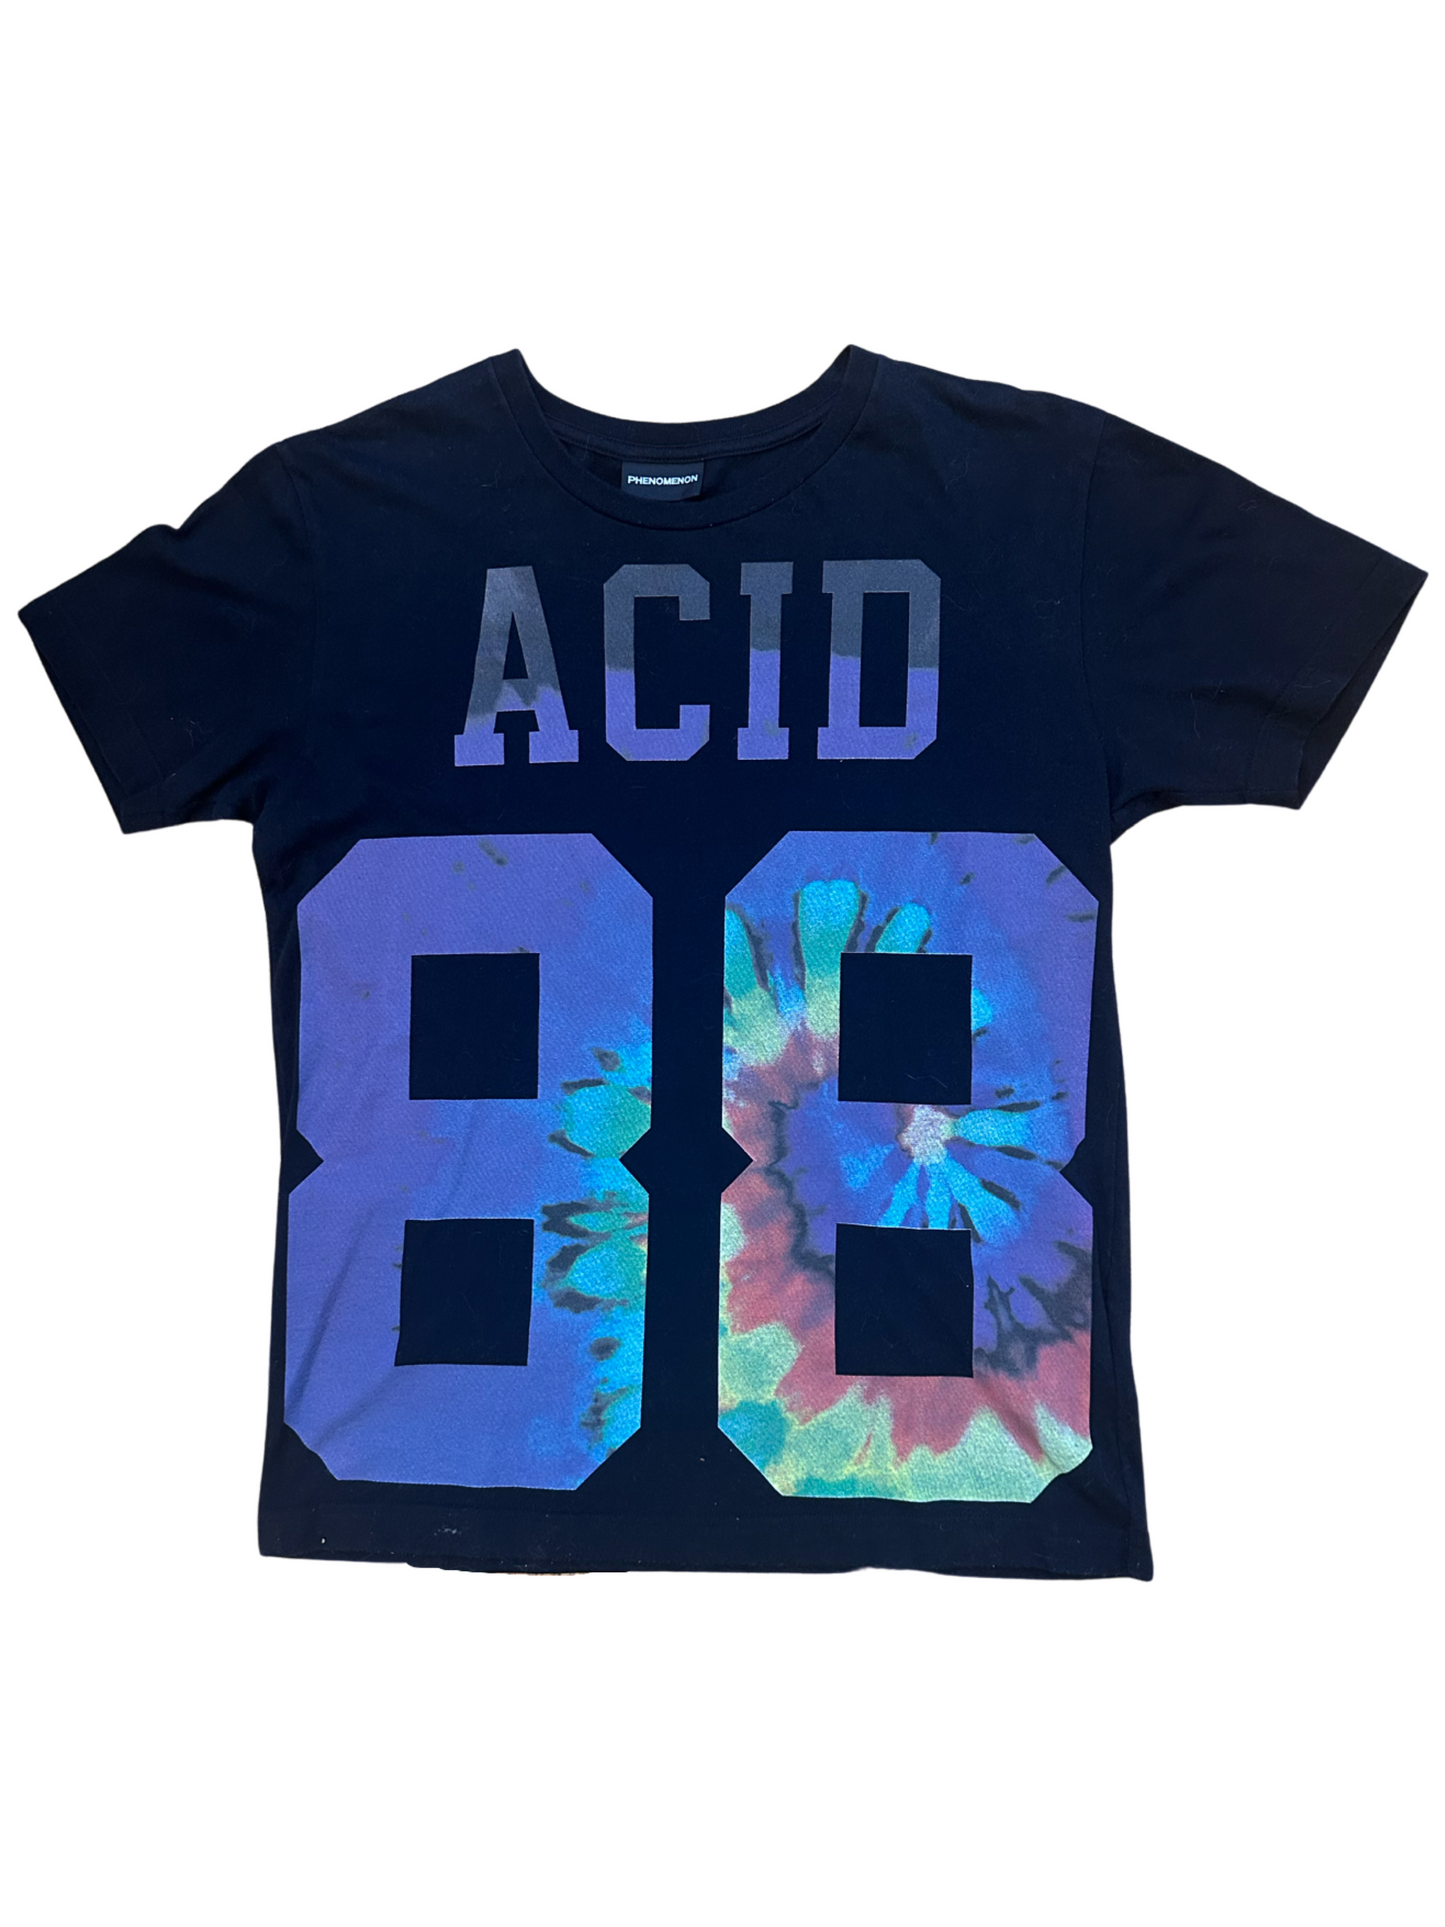 Phenomenon ‘Acid’ Tie Dye Jersey T-shirt Sz Medium